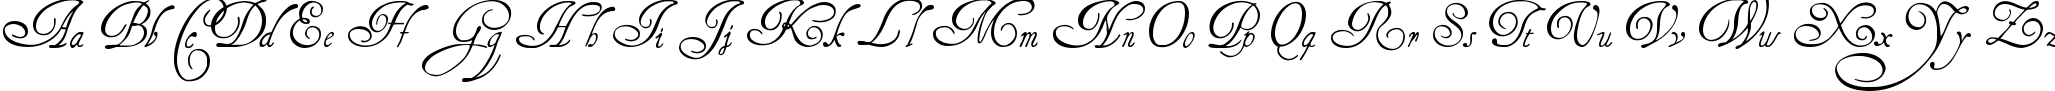 Пример написания английского алфавита шрифтом HenryMorganHand